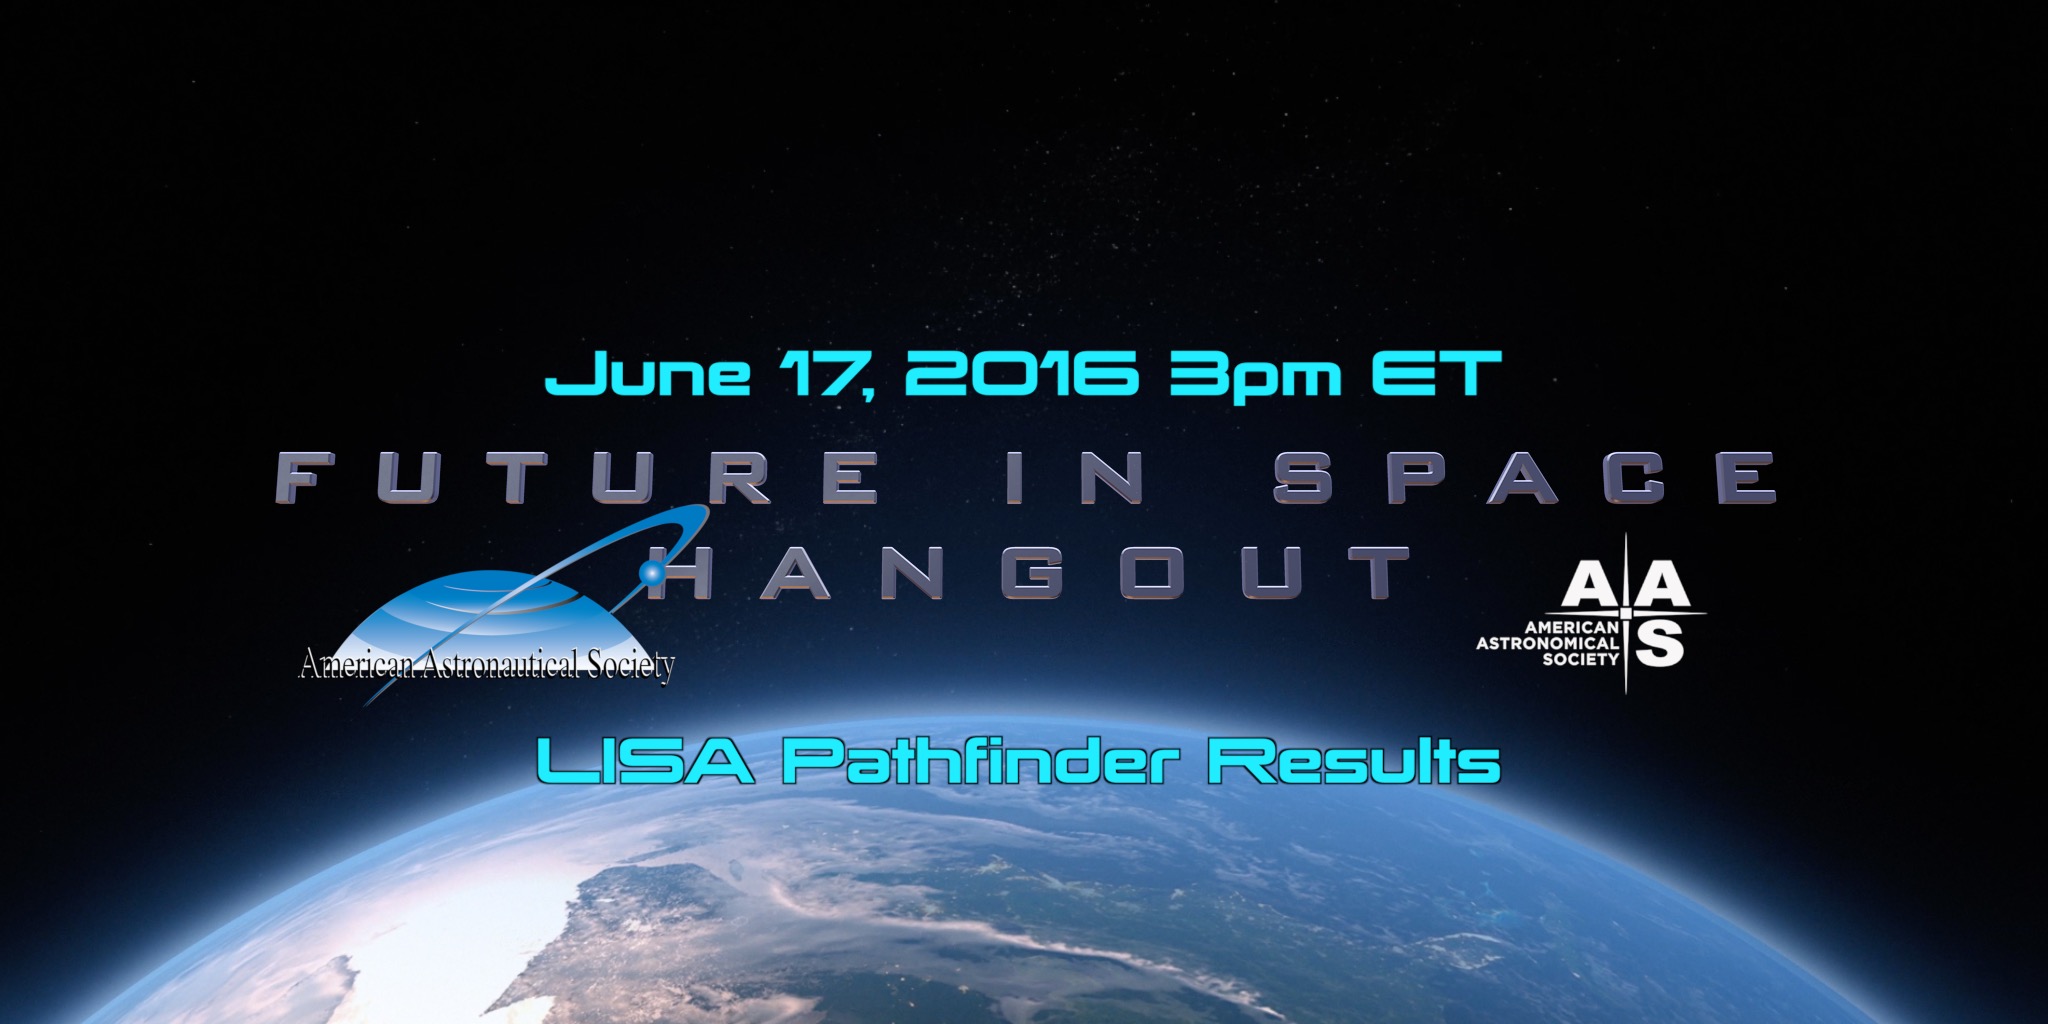 LISA Pathfinder Results hangout